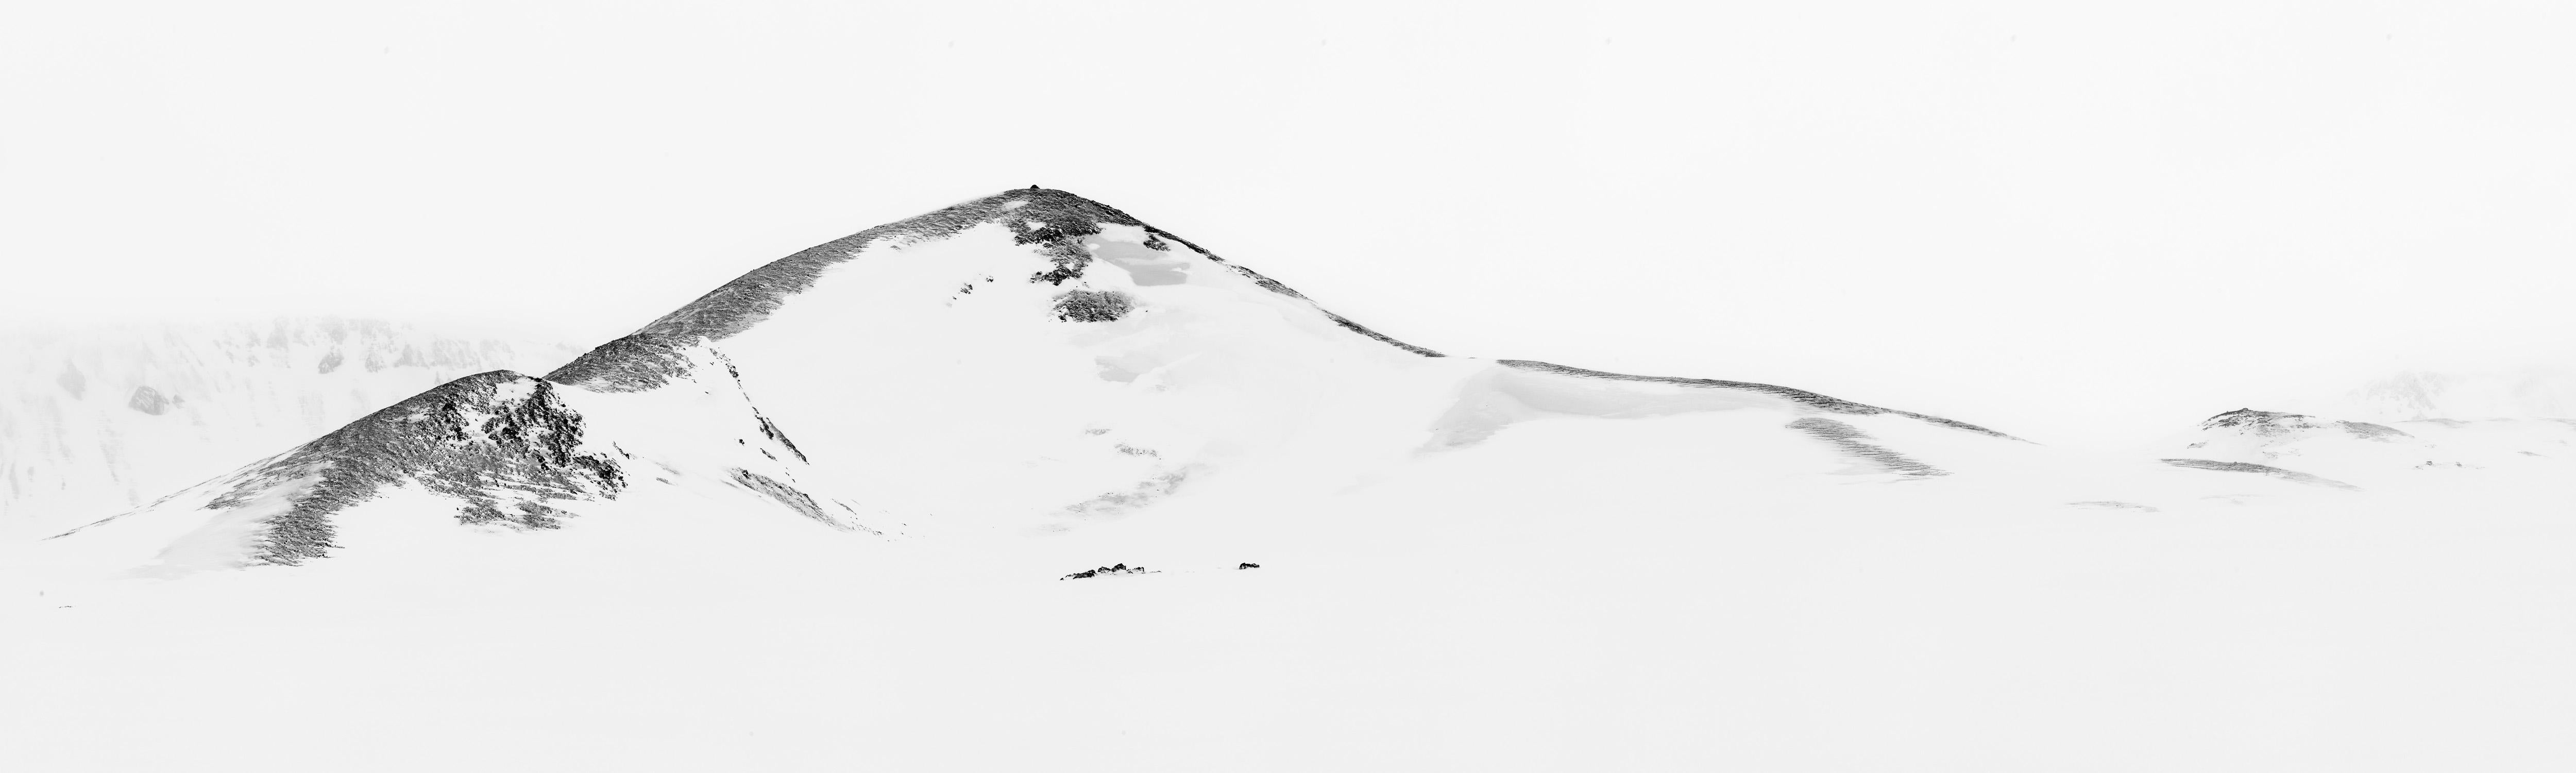 David Burdeny Black and White Photograph - Fjallabak Study 01, Iceland